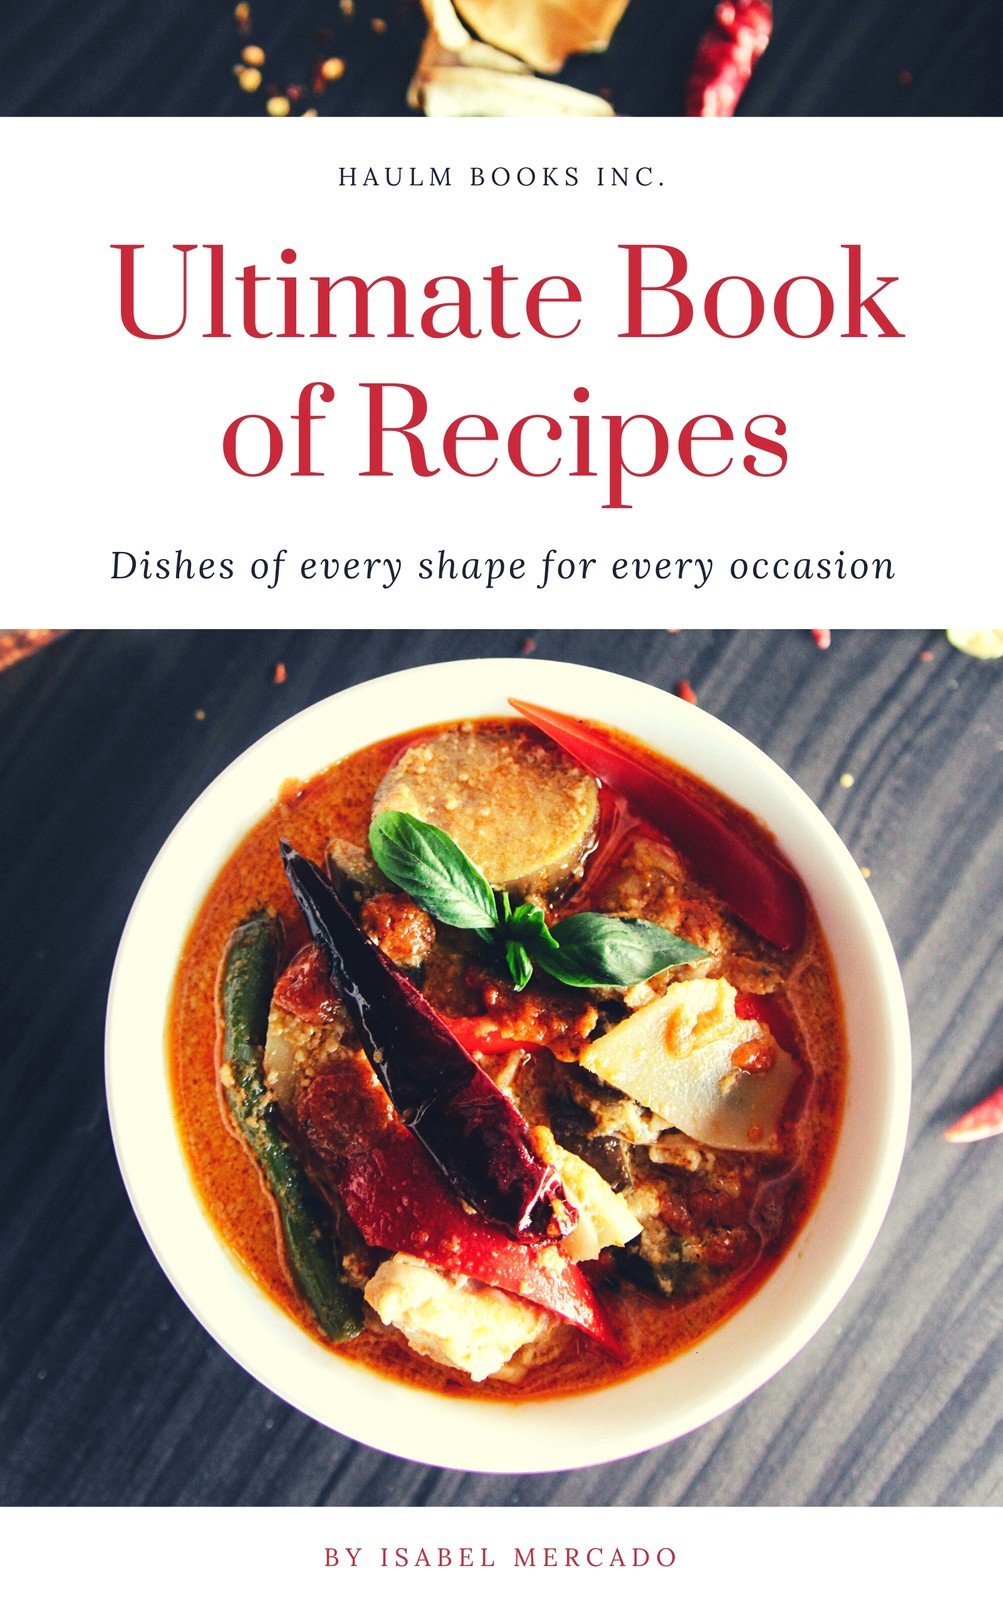 https://marketplace.canva.com/EADao-bRSSQ/1/0/1003w/canva-red-and-white-cookbook-book-cover-rrJOs158M0U.jpg